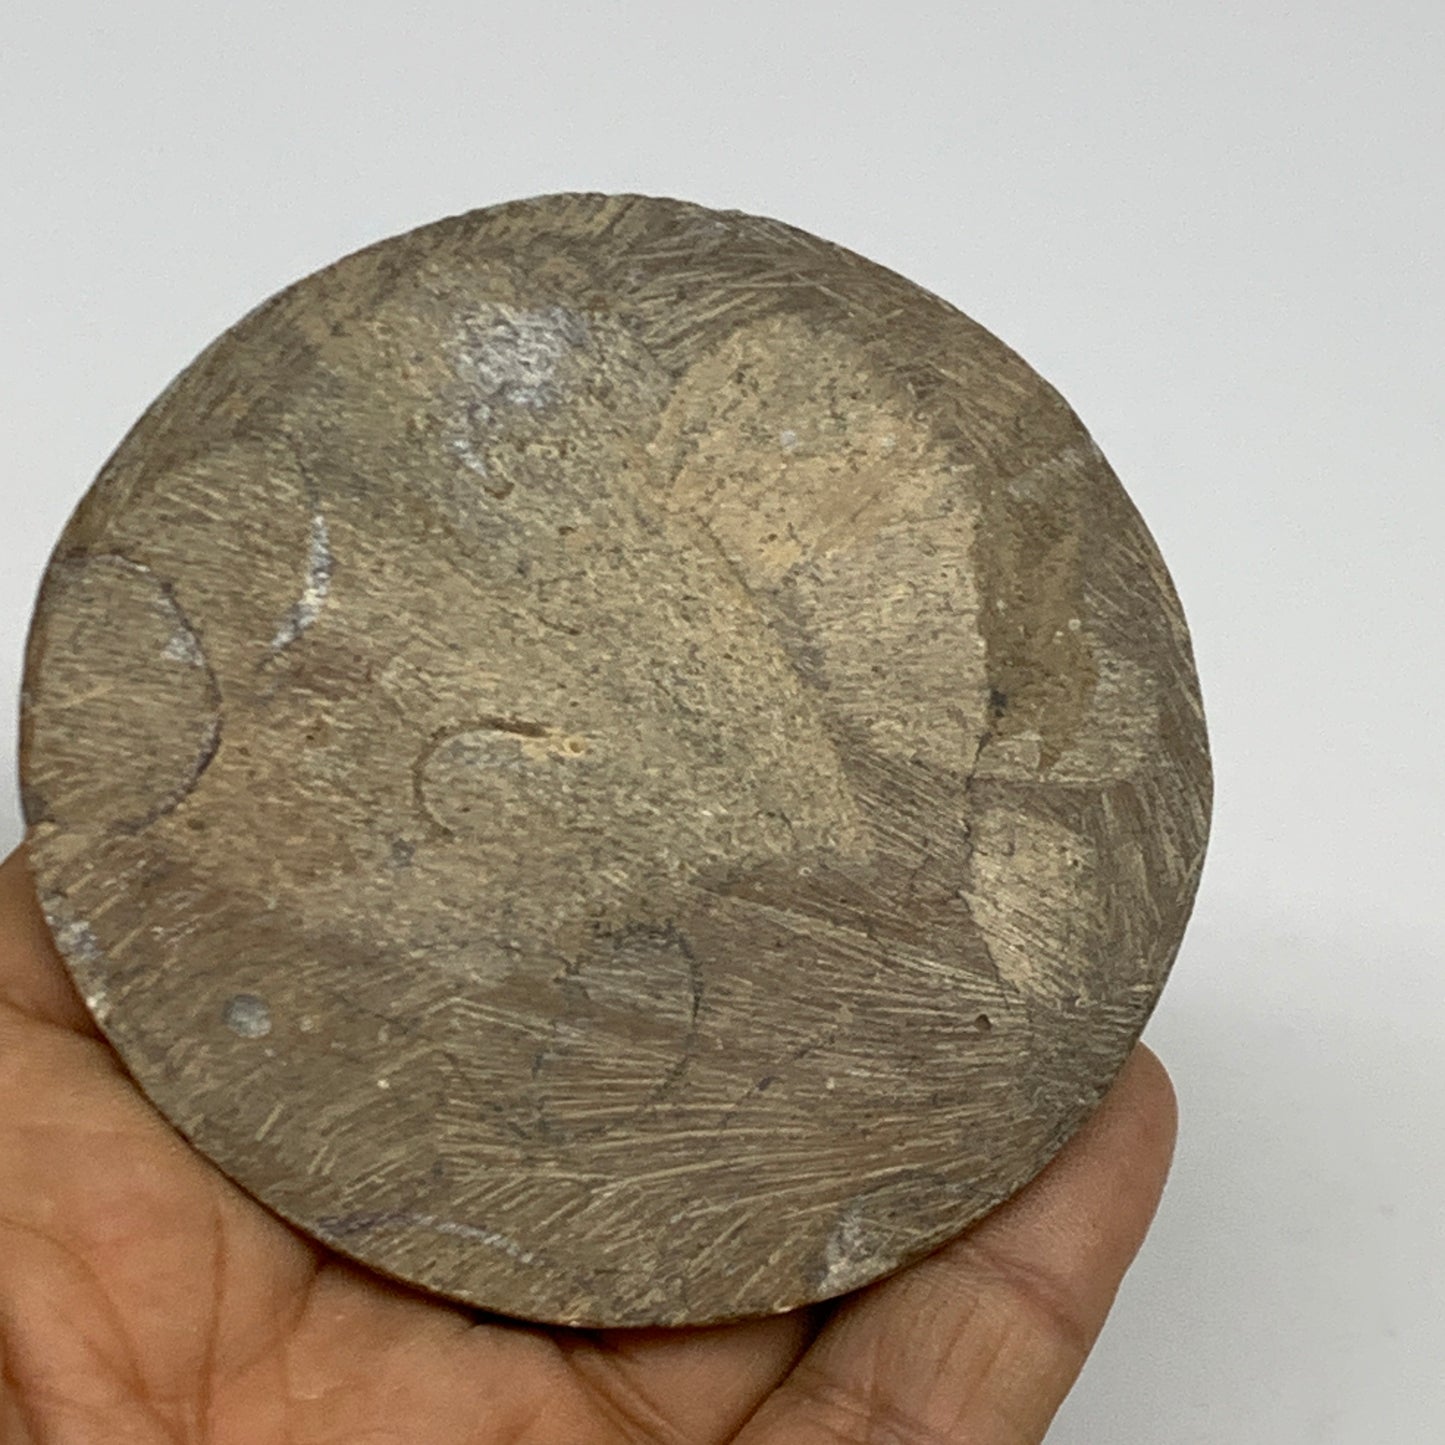 85g, 2.8"x2.8"x0.5", Goniatite (Button) Ammonite Polished Fossils, B30115